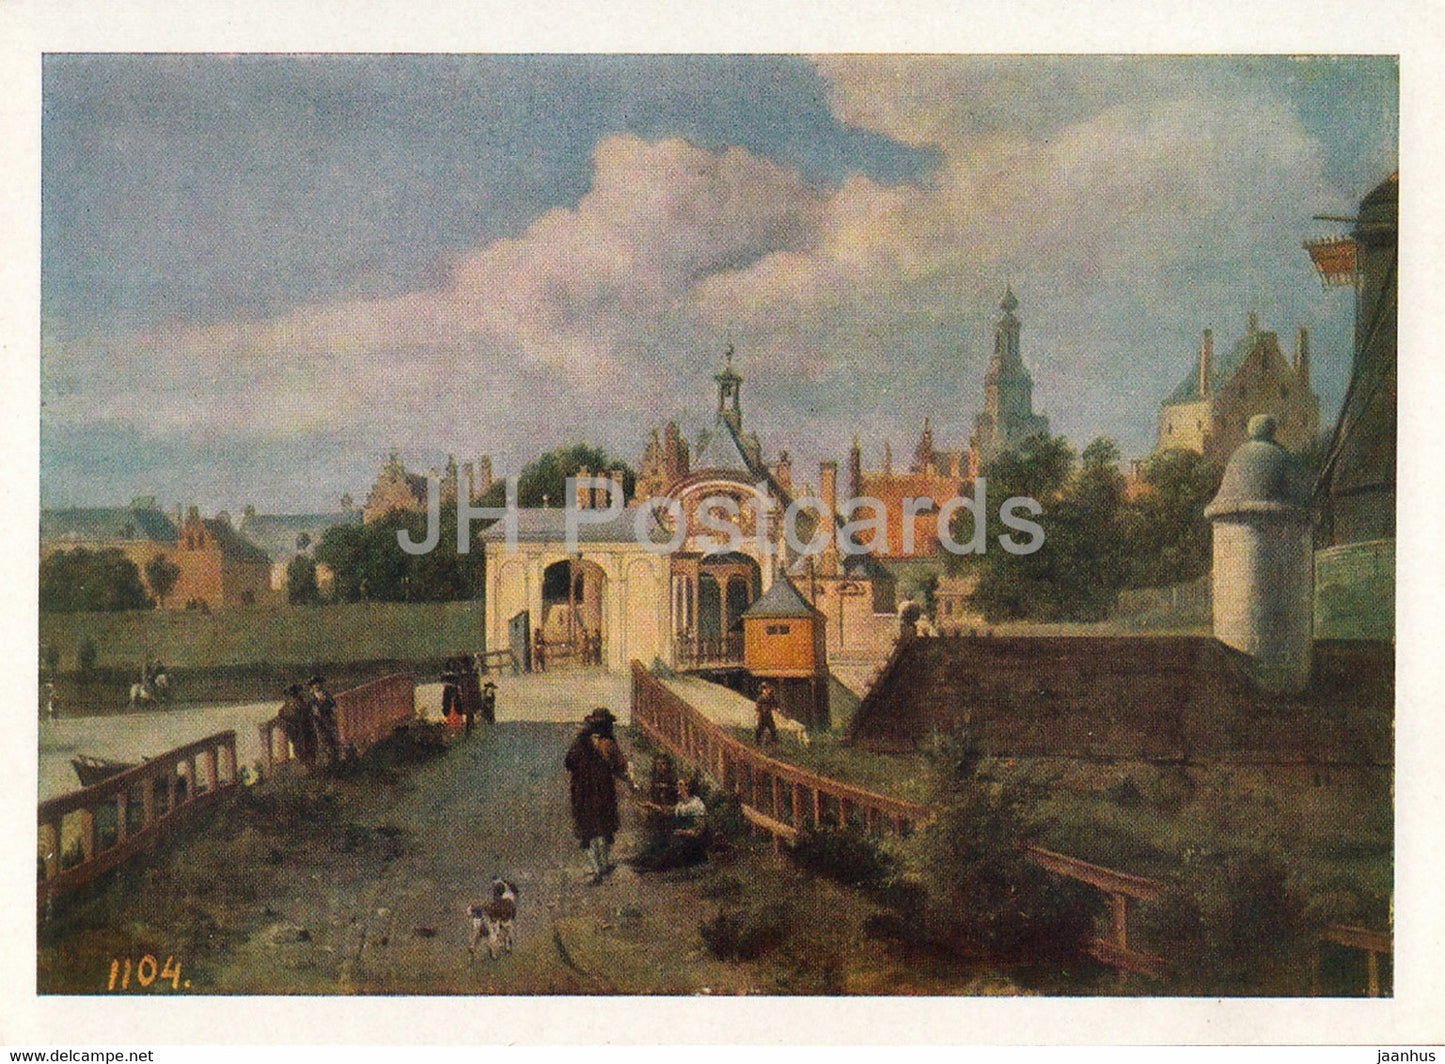 painting by Jan van der Heyden - St. Anthony's Gate in Amsterdam - Dutch art - 1961 - Russia USSR - unused - JH Postcards